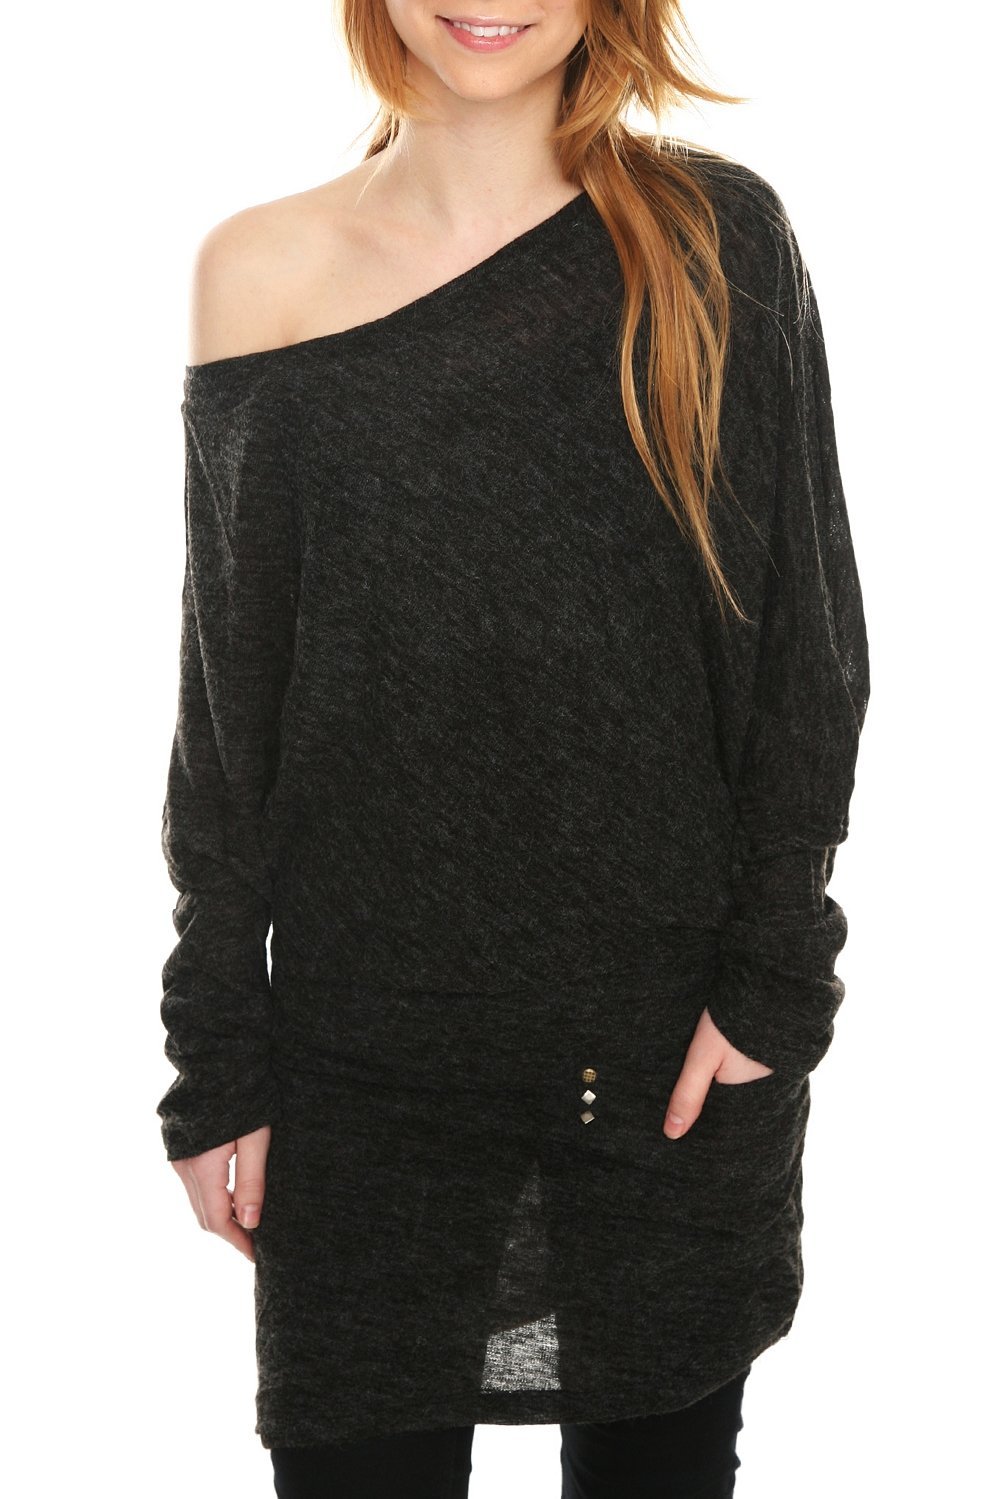 Black Asymmetric Pocket Sweater Top